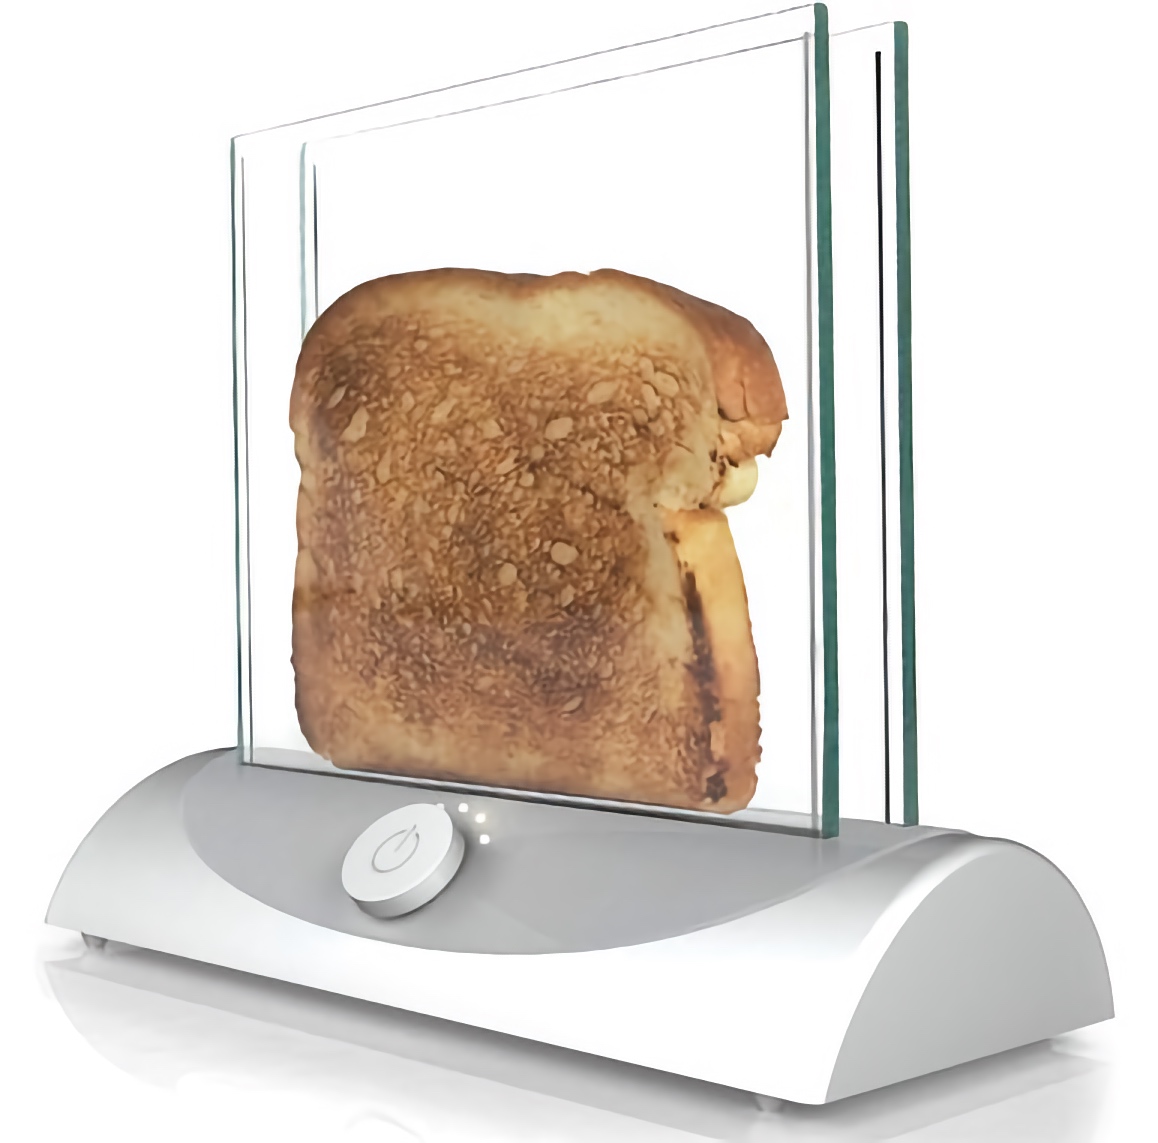 Transparent Toaster